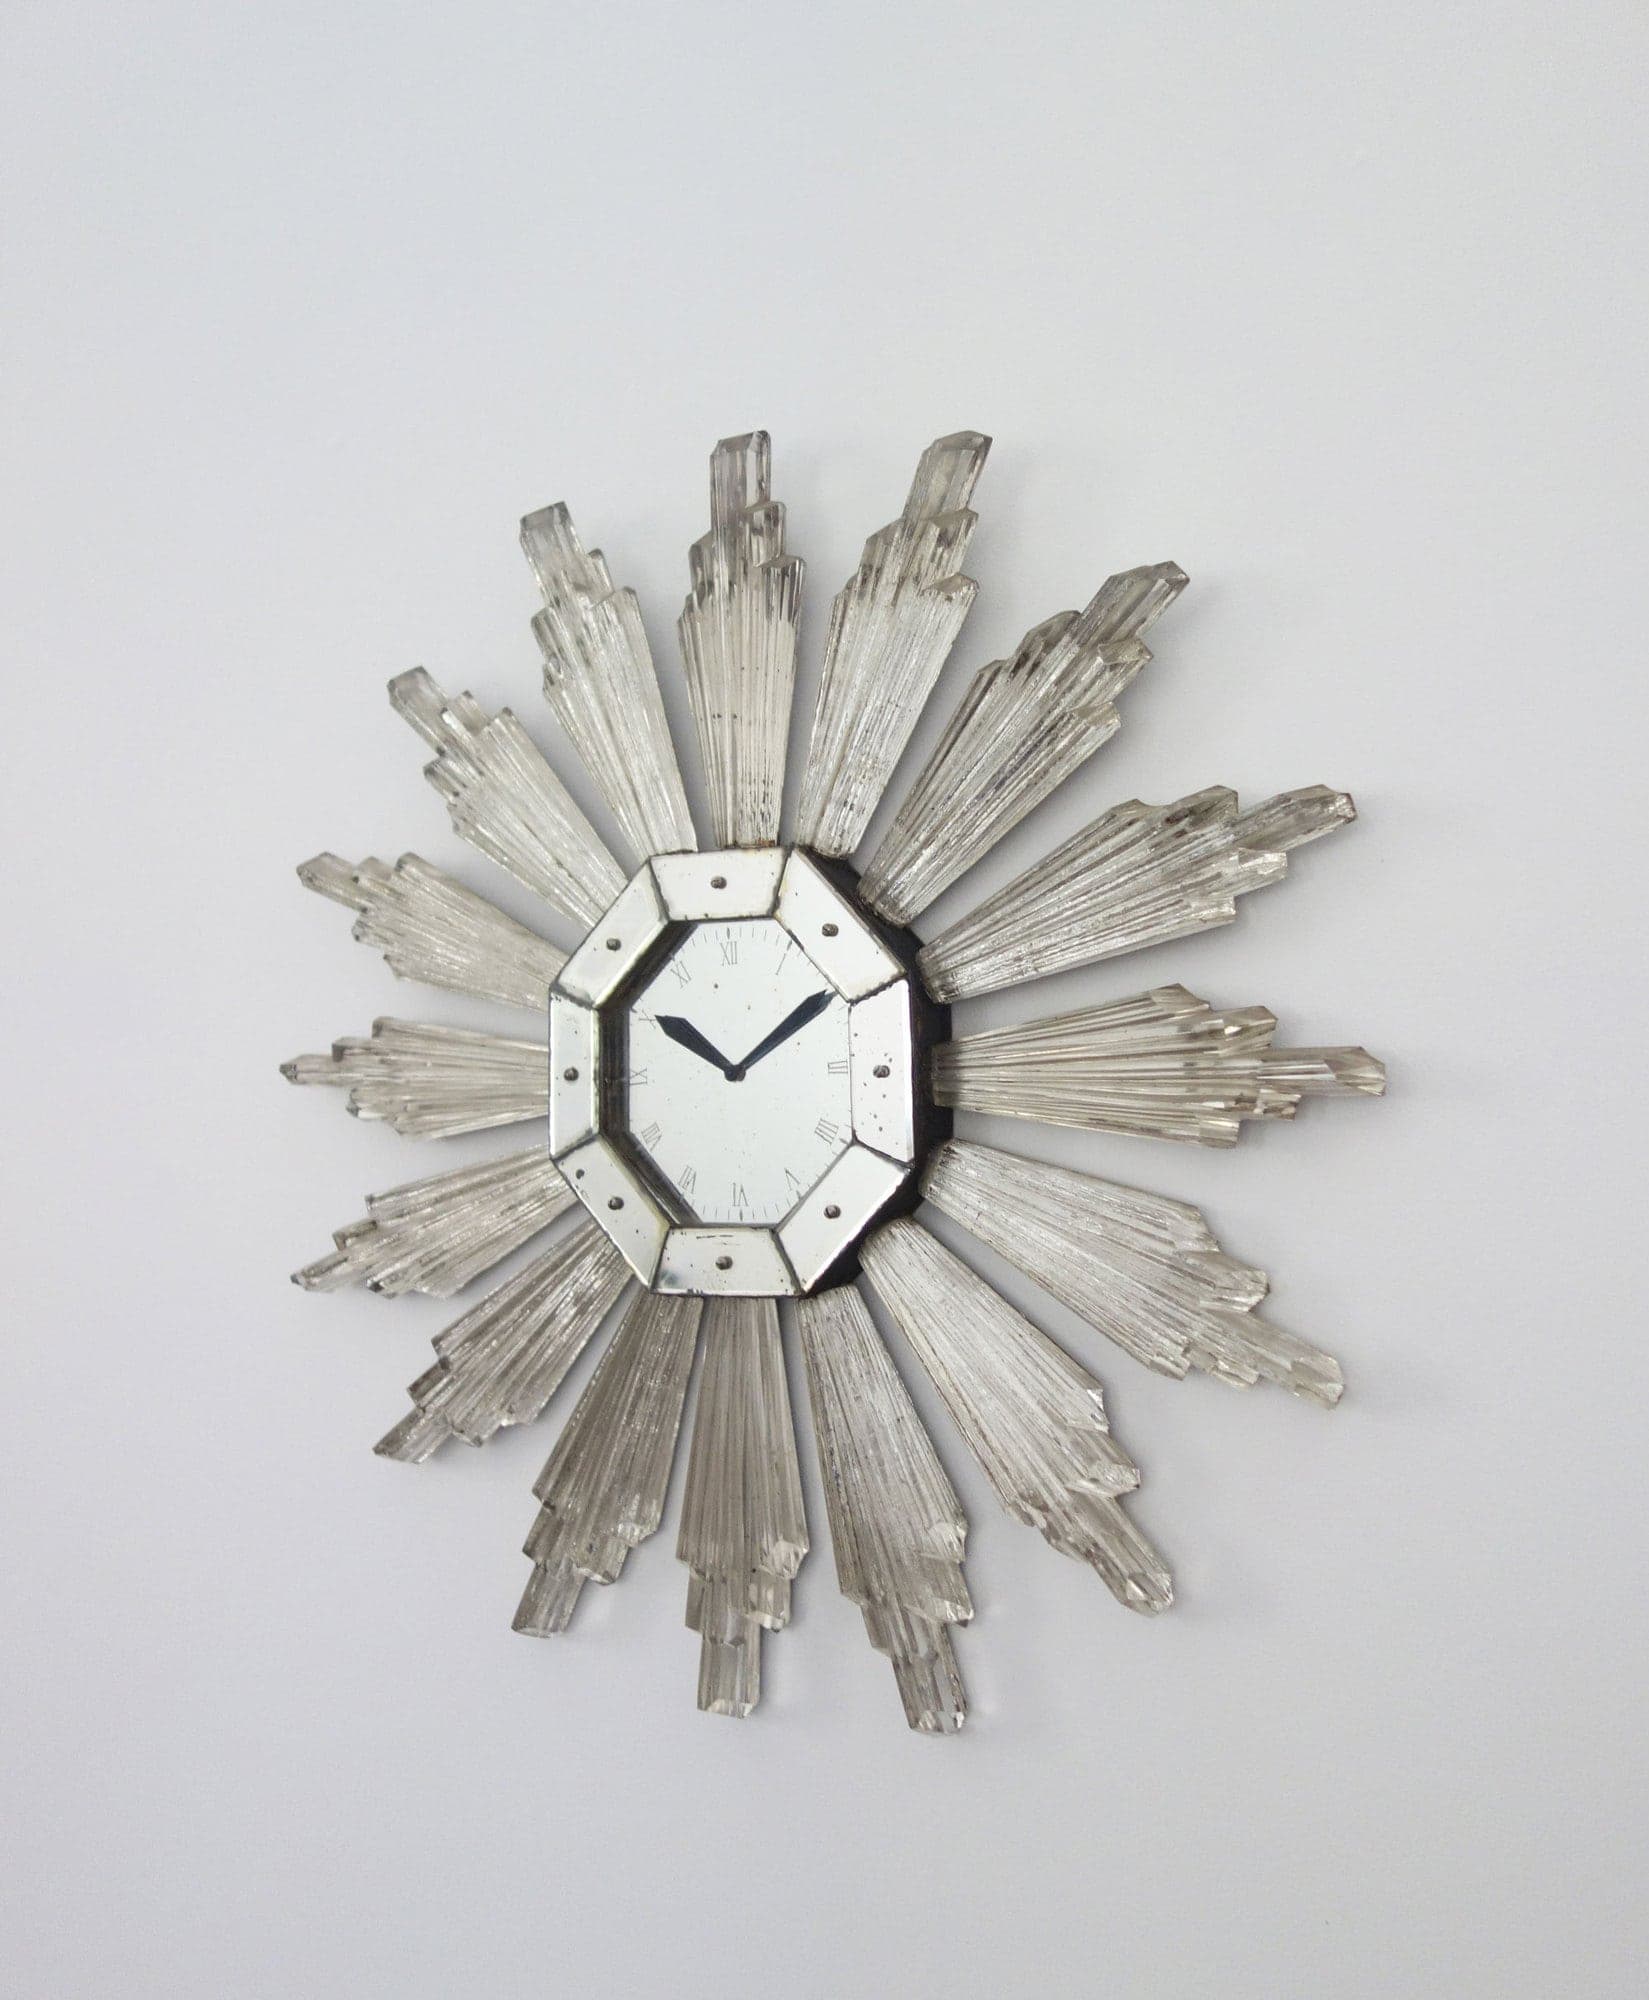 Serge Roche, Very rare wall clock (sold), vue 01